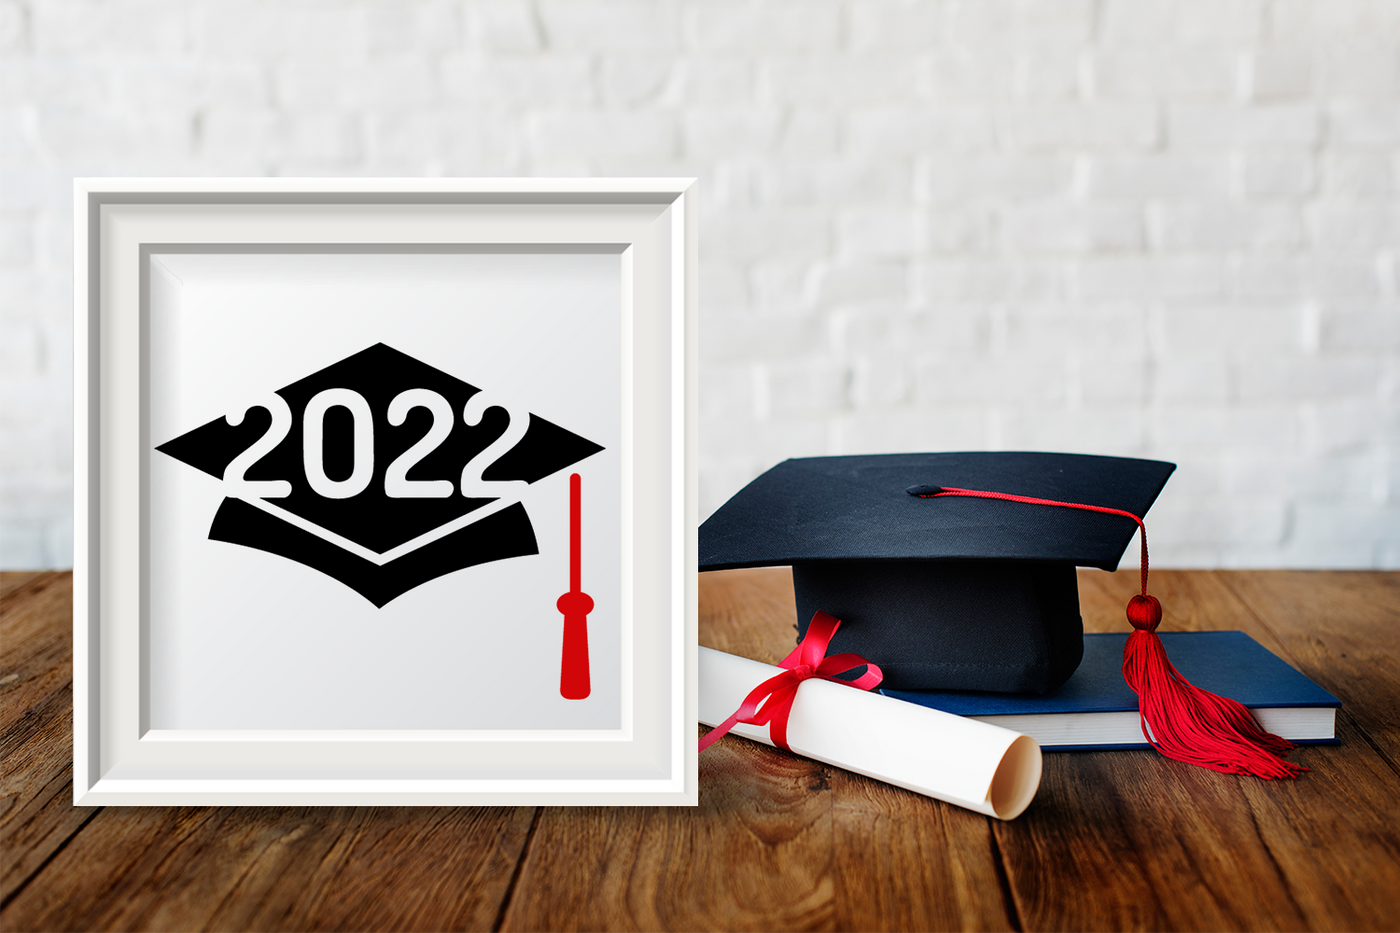 Graduation cap years design, includes 2021-2030